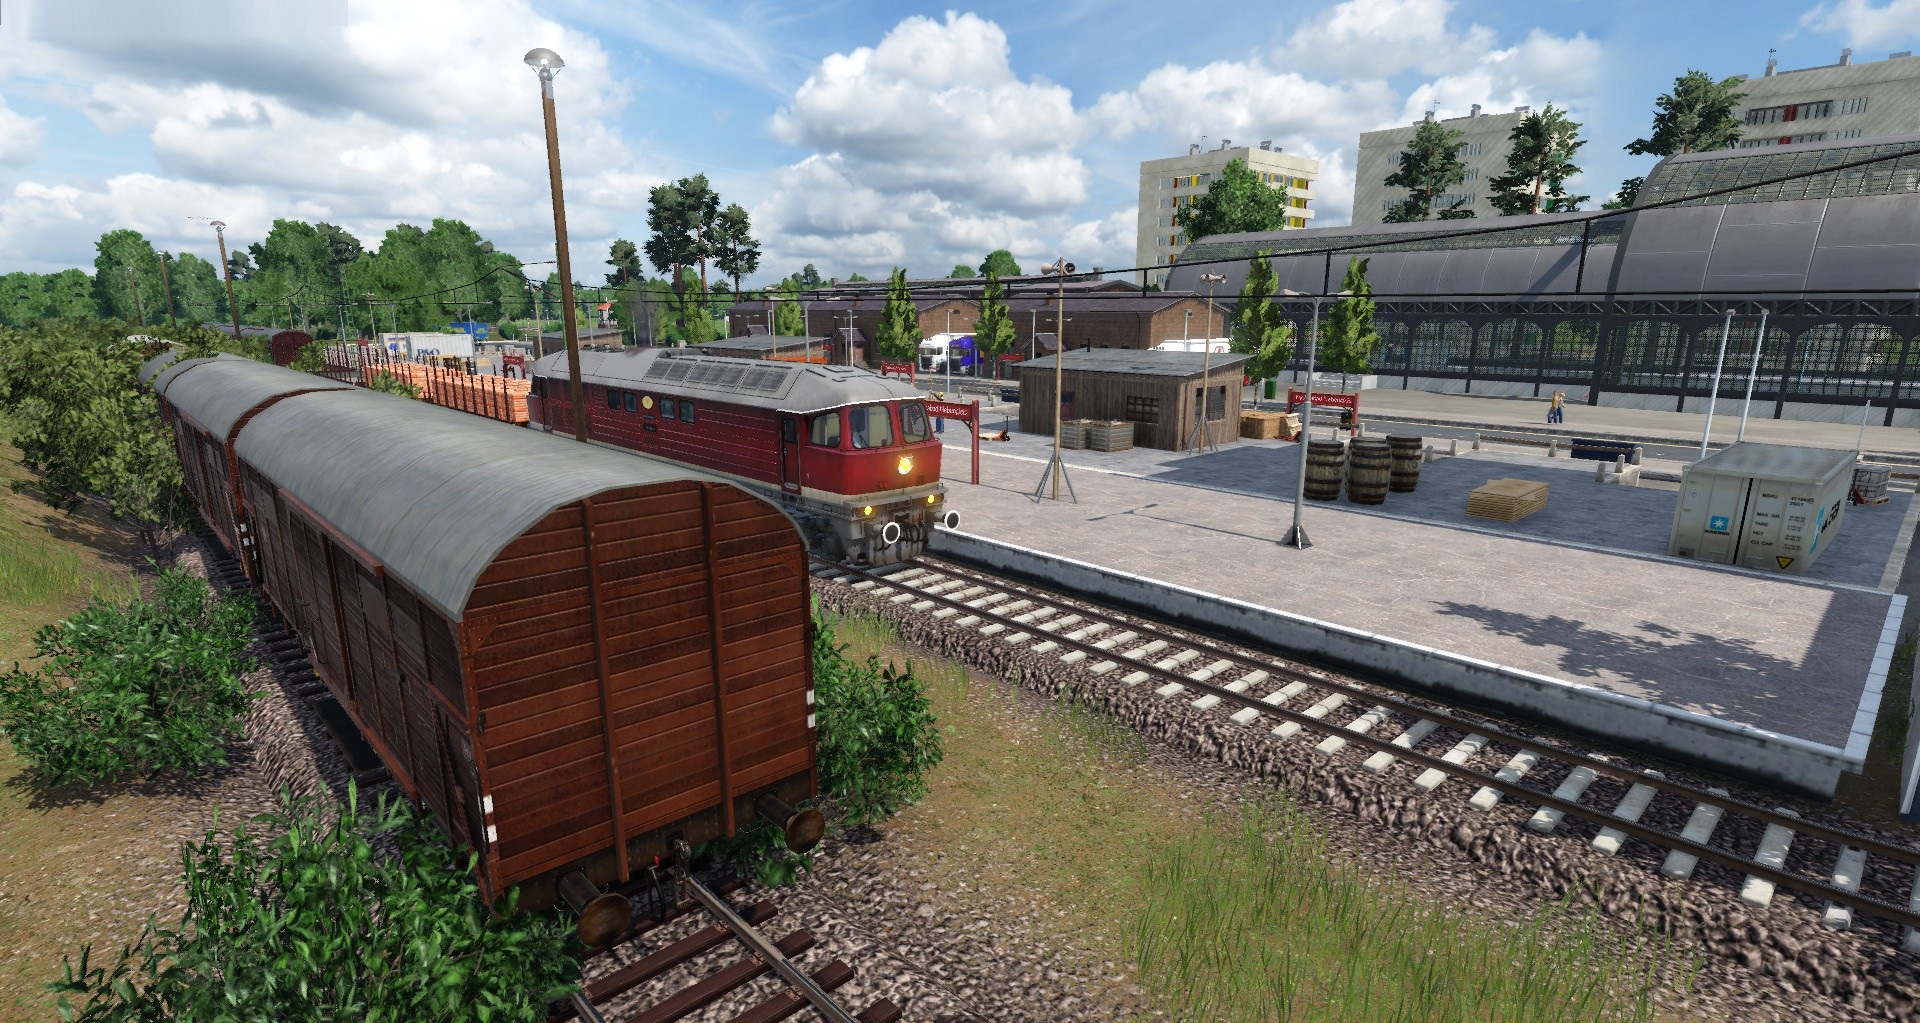 Güterbahnhof mit stillgelegtem Gleis